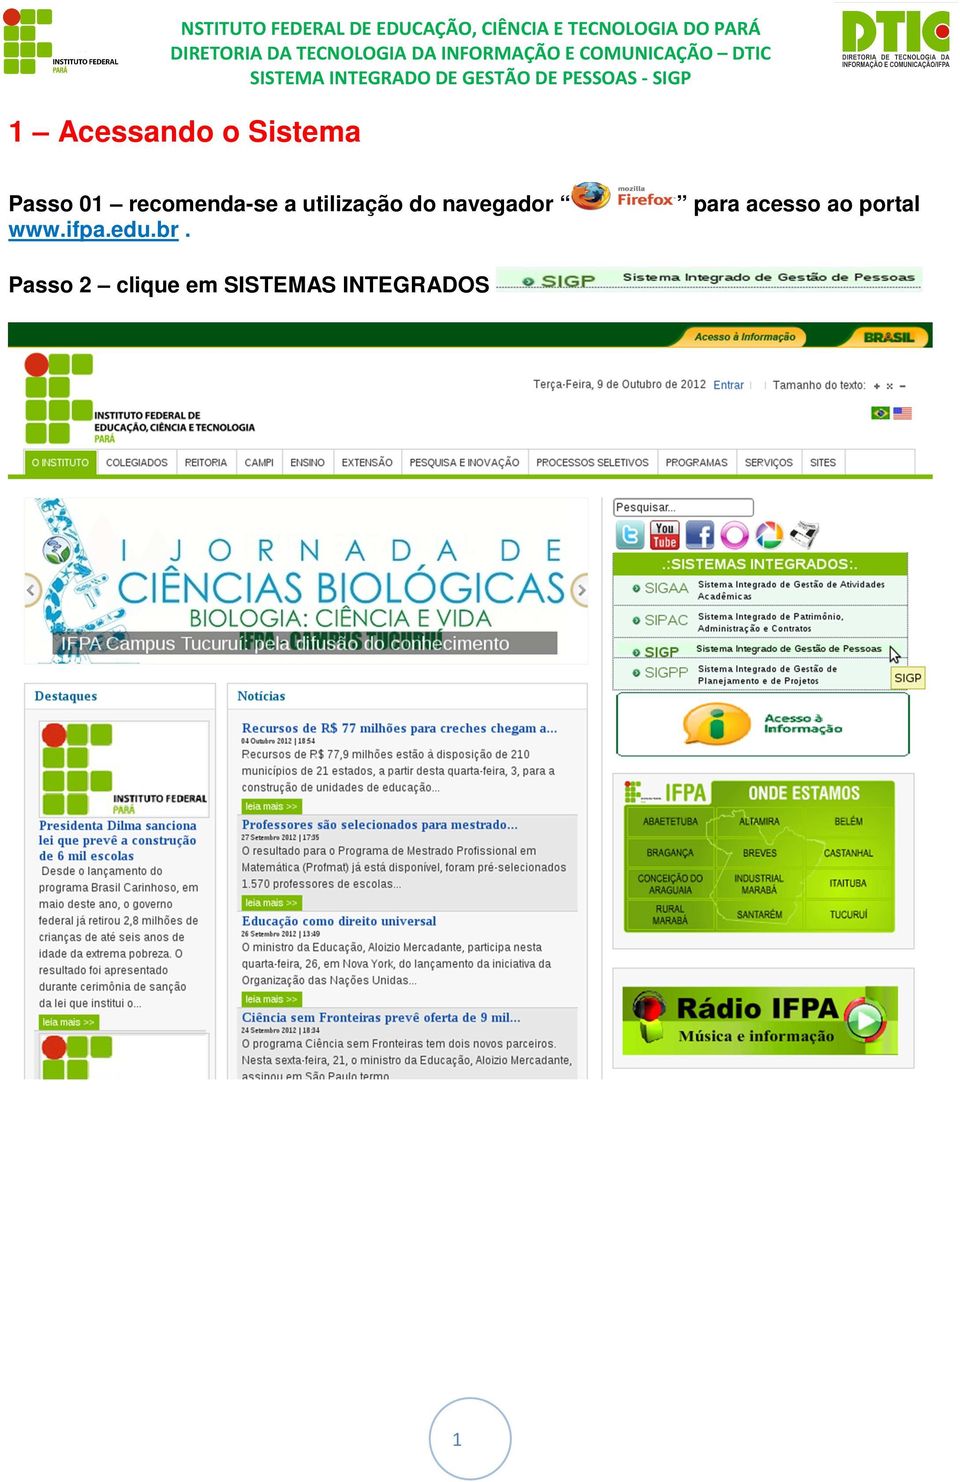 navegador www.ifpa.edu.br.